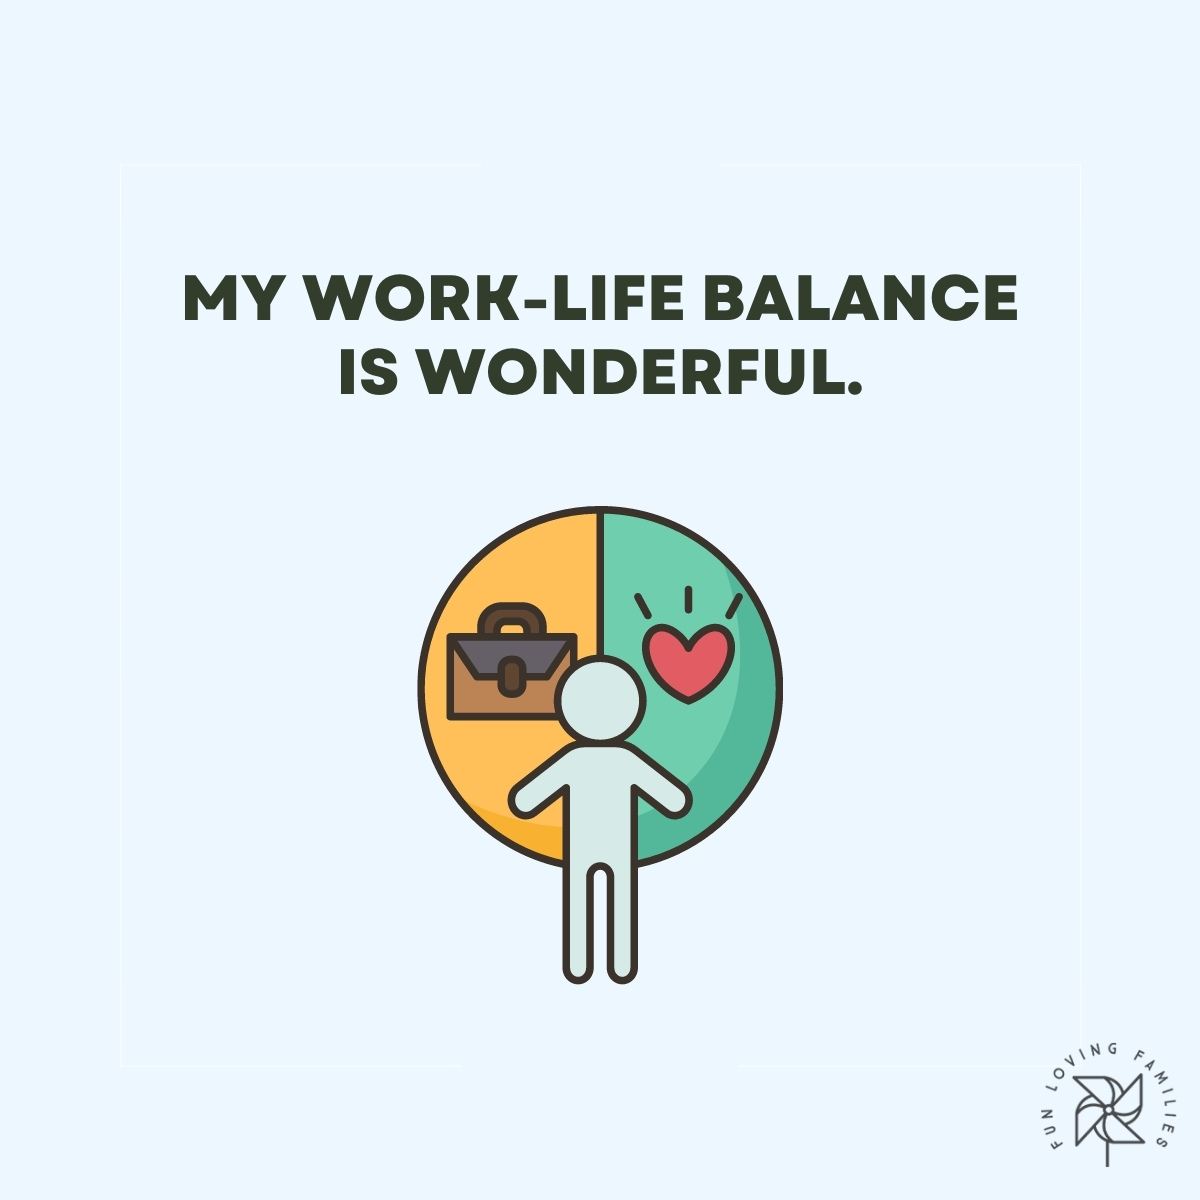 My work-life balance is wonderful affirmation